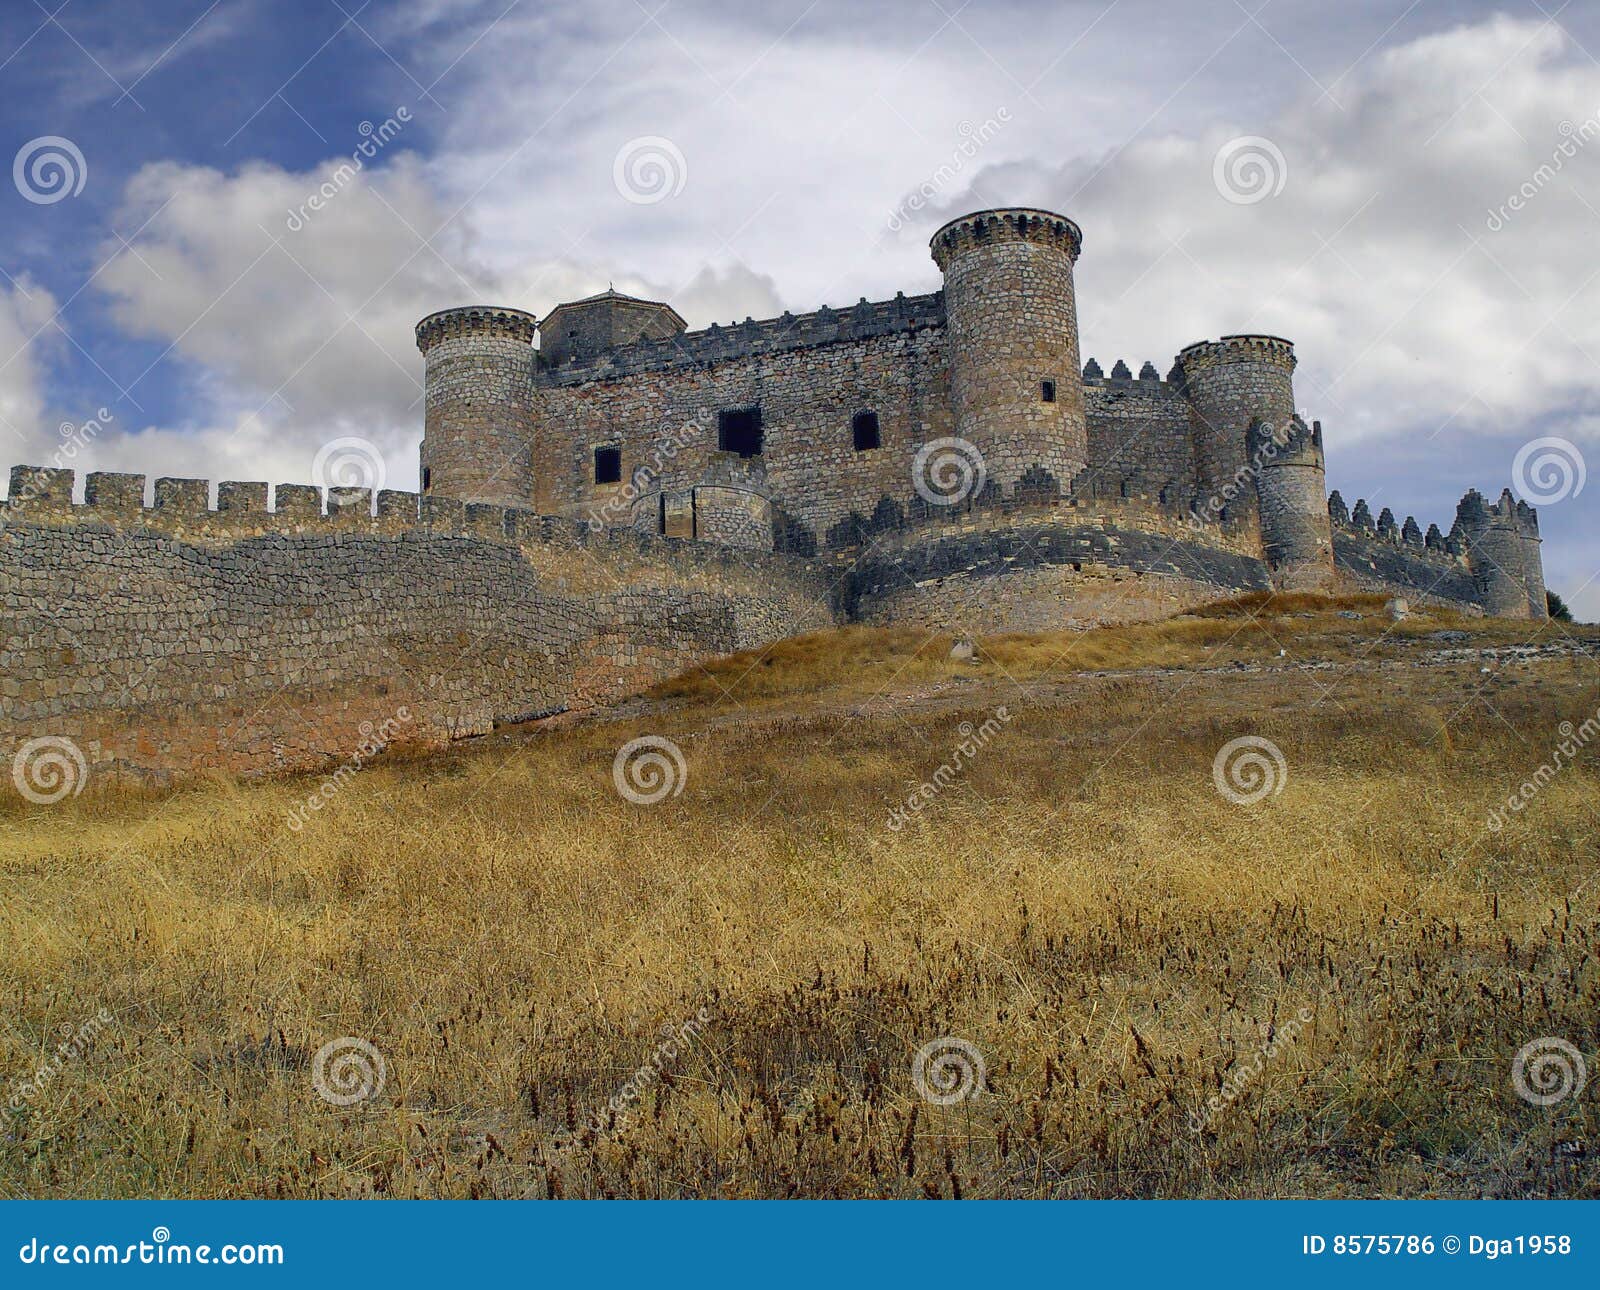 castle of belmonte, cuenca, spain